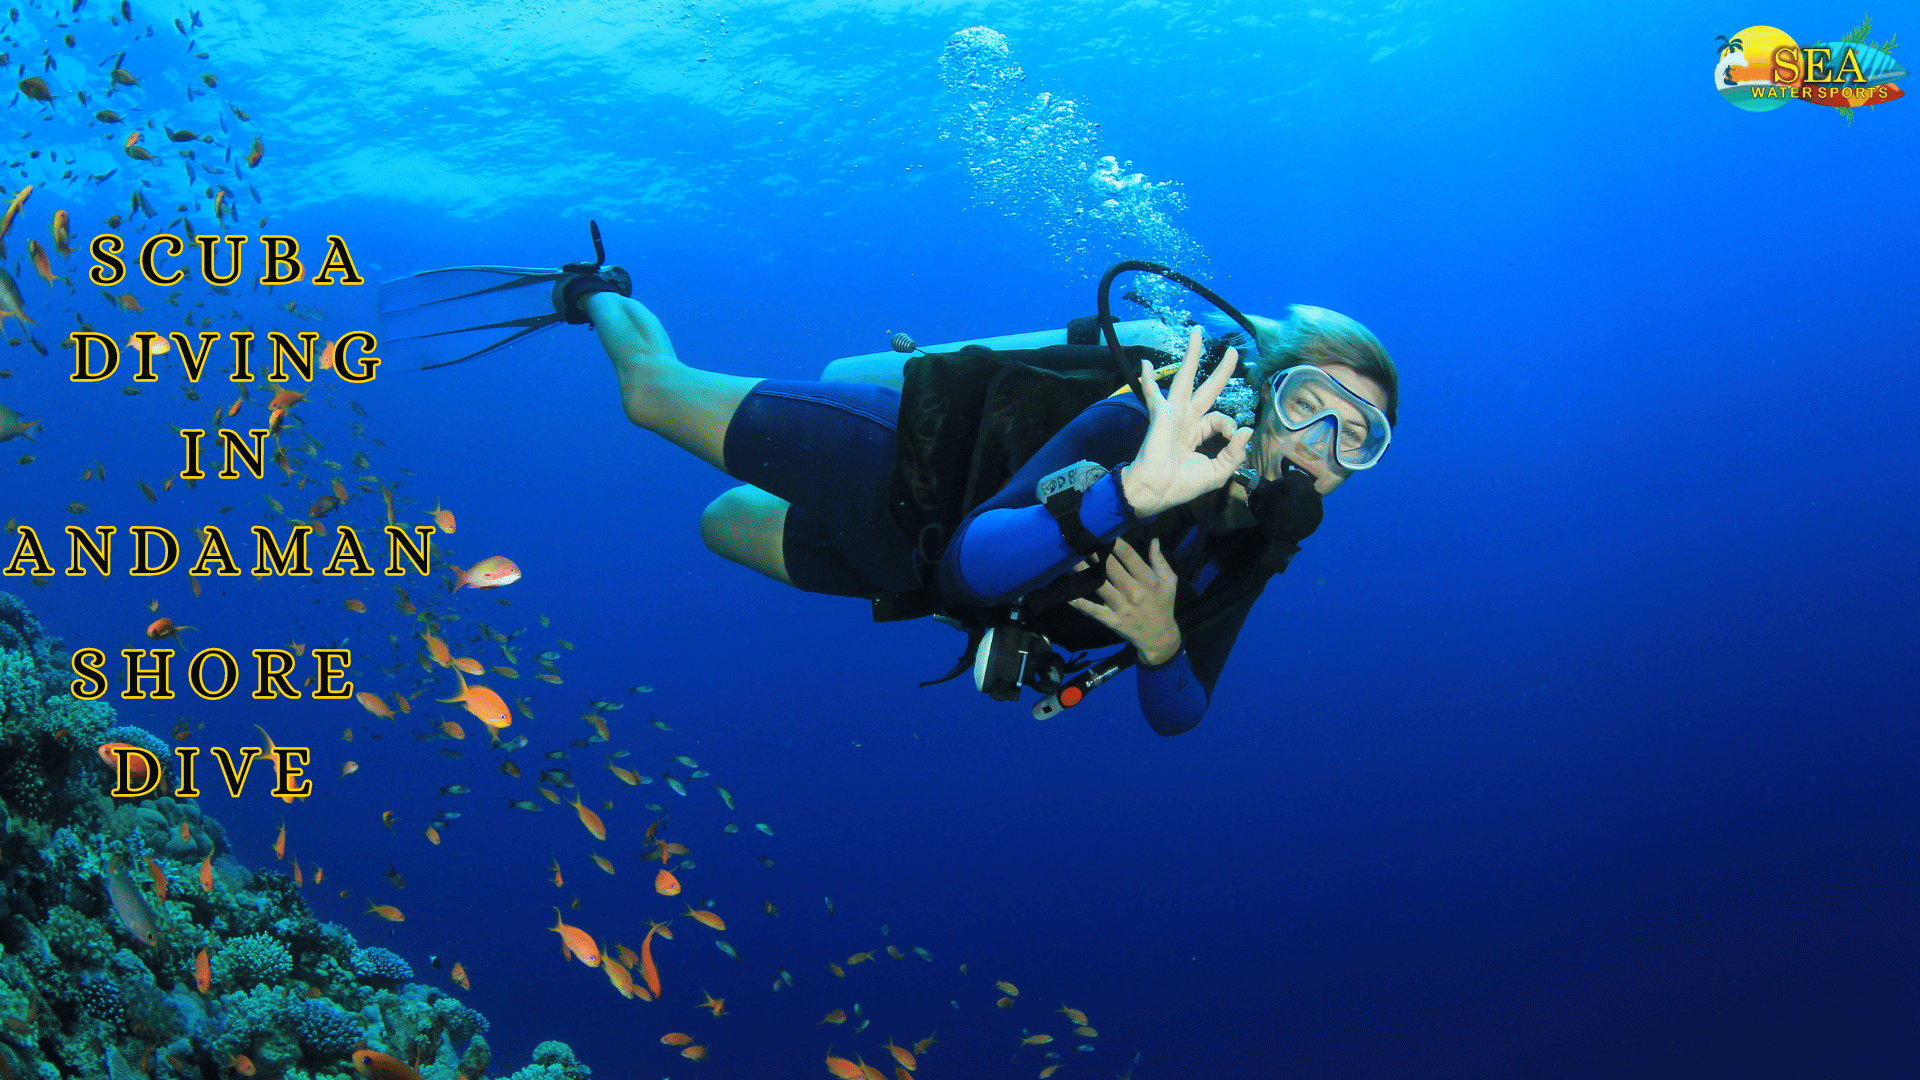 Scuba Diving in Andaman Shore Dive, South Andaman, Andaman and Nicobar, India